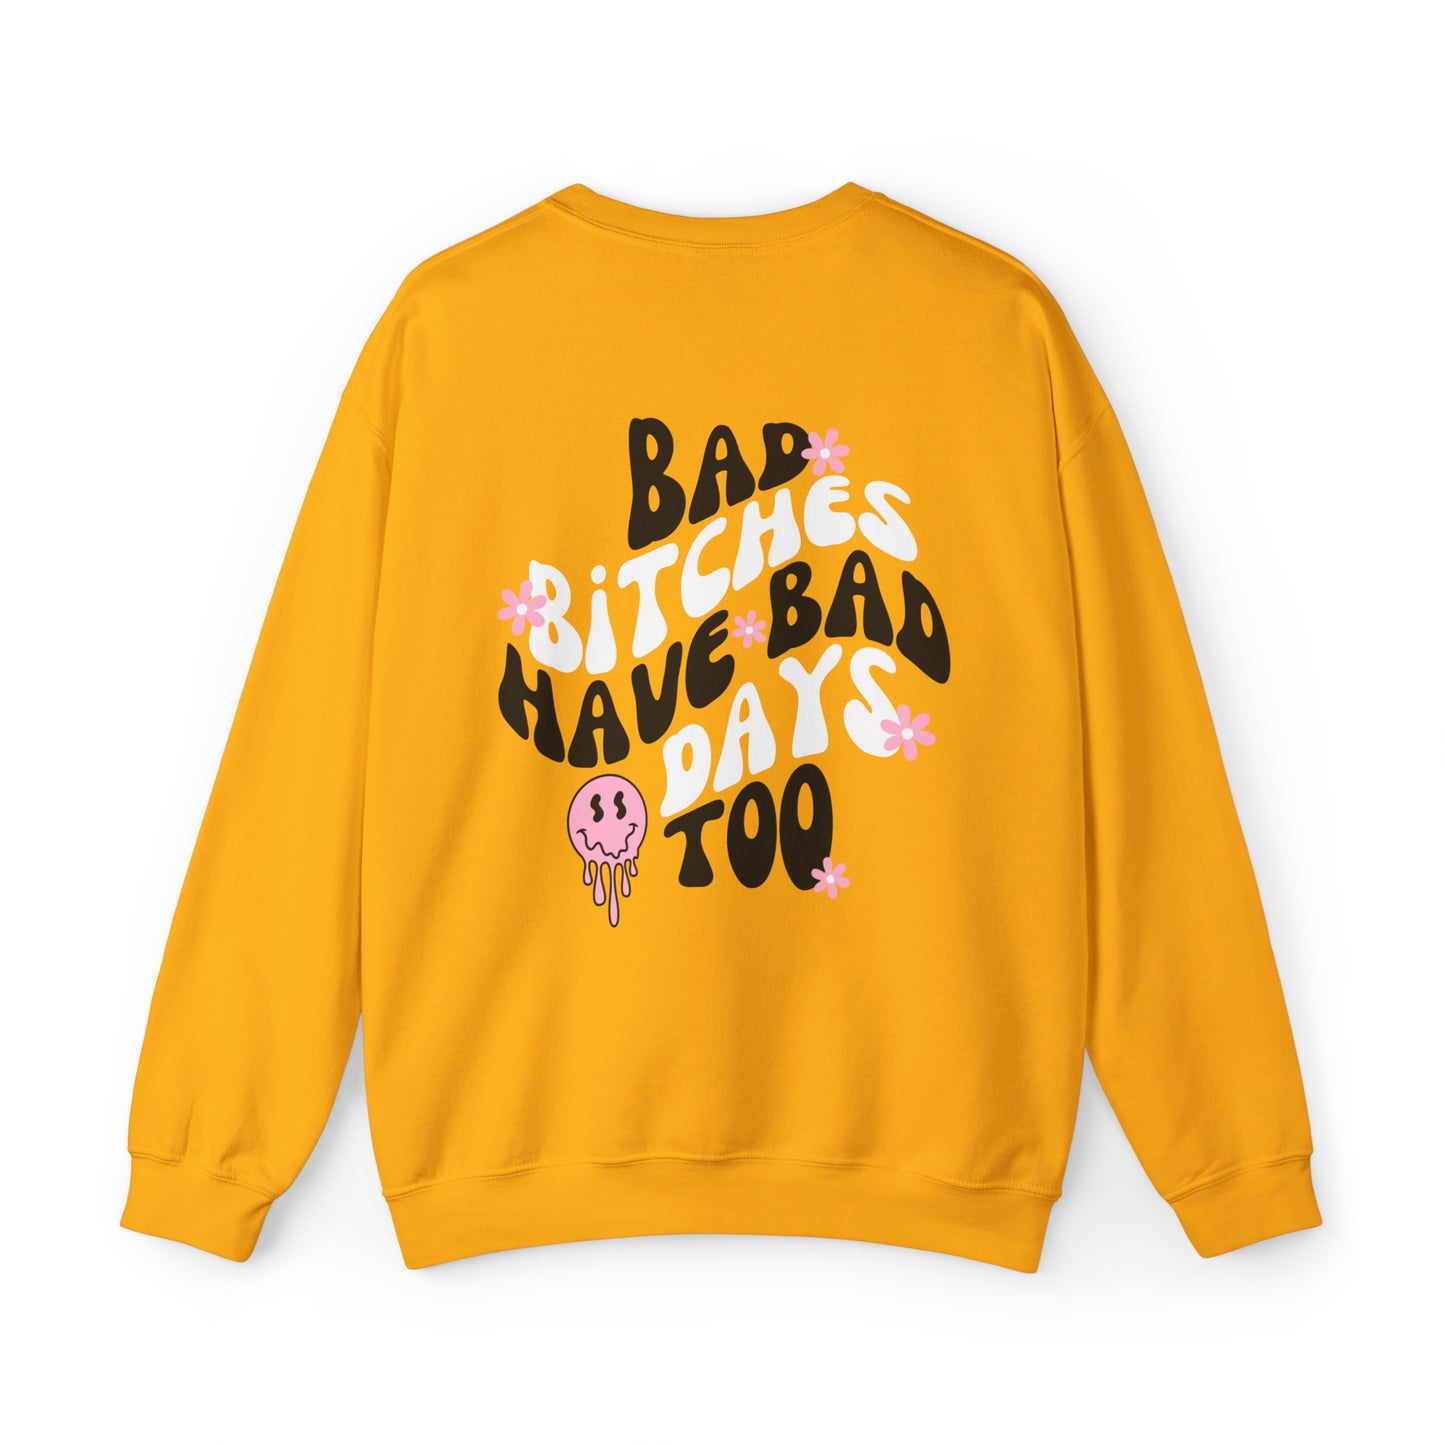 Bad Bitches Have Bad Days Too Crewneck Sweatshirt